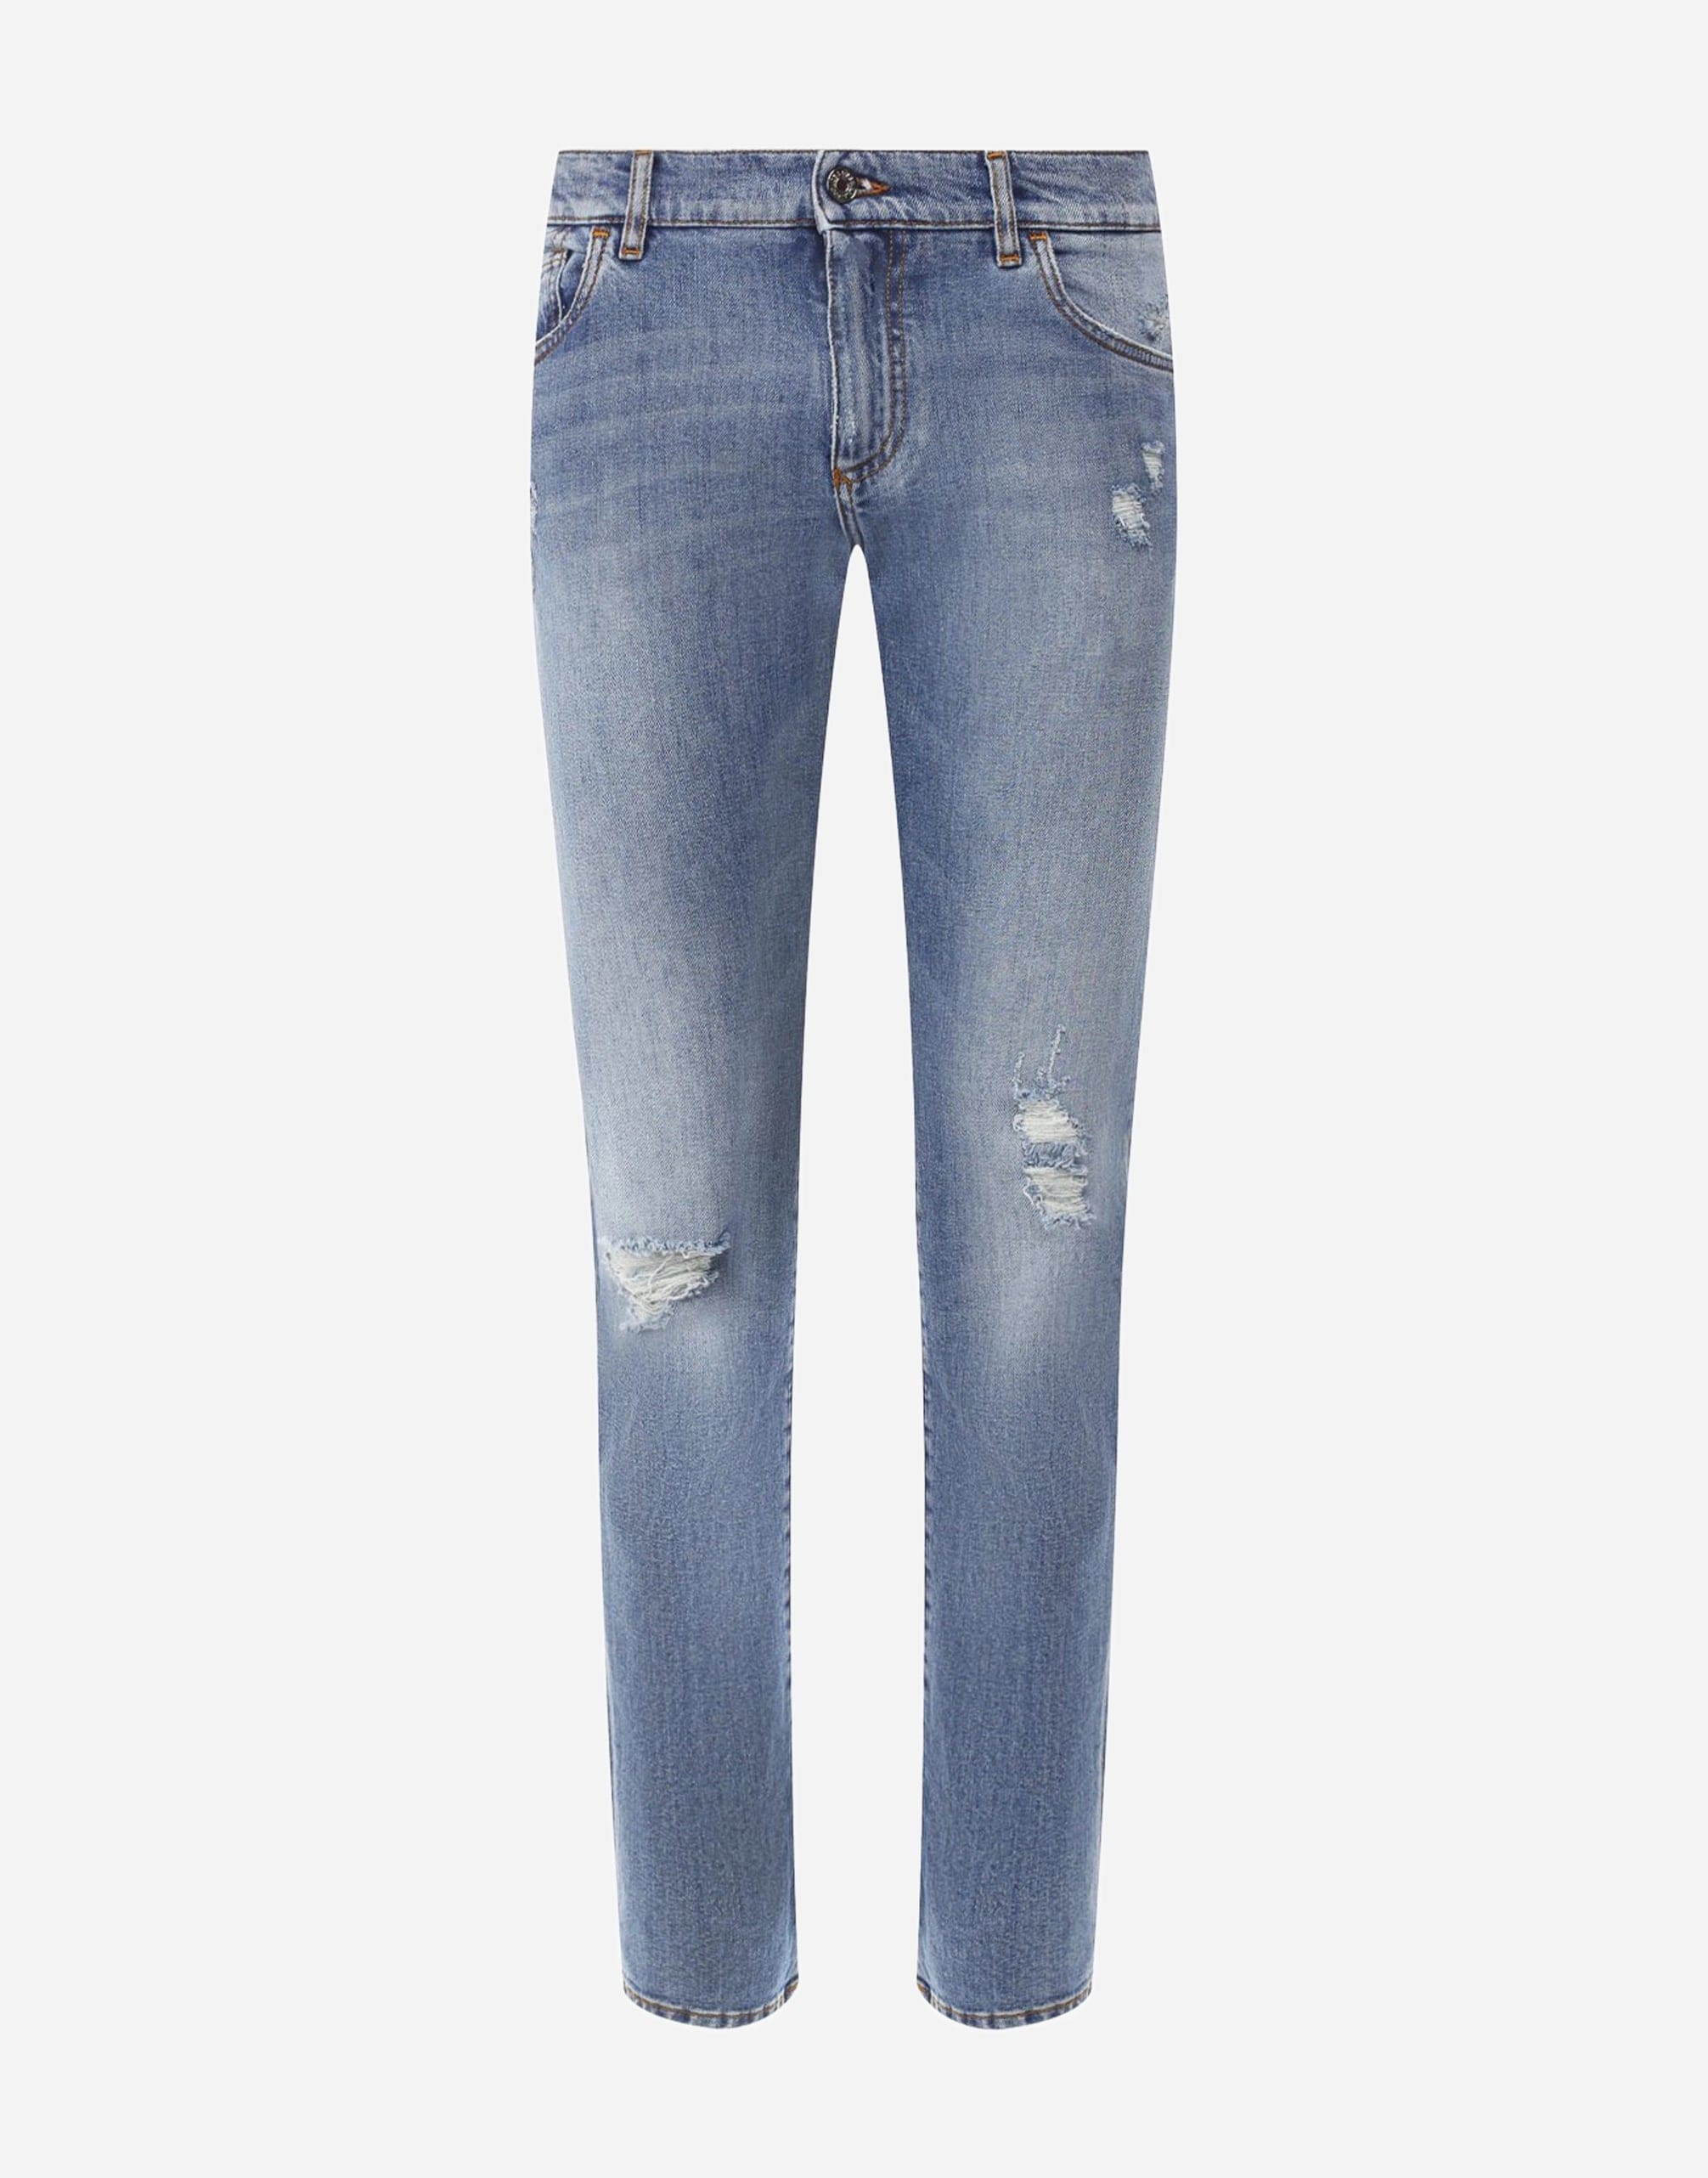 Dolce & Gabbana Distressed Slim-Fit Jeans